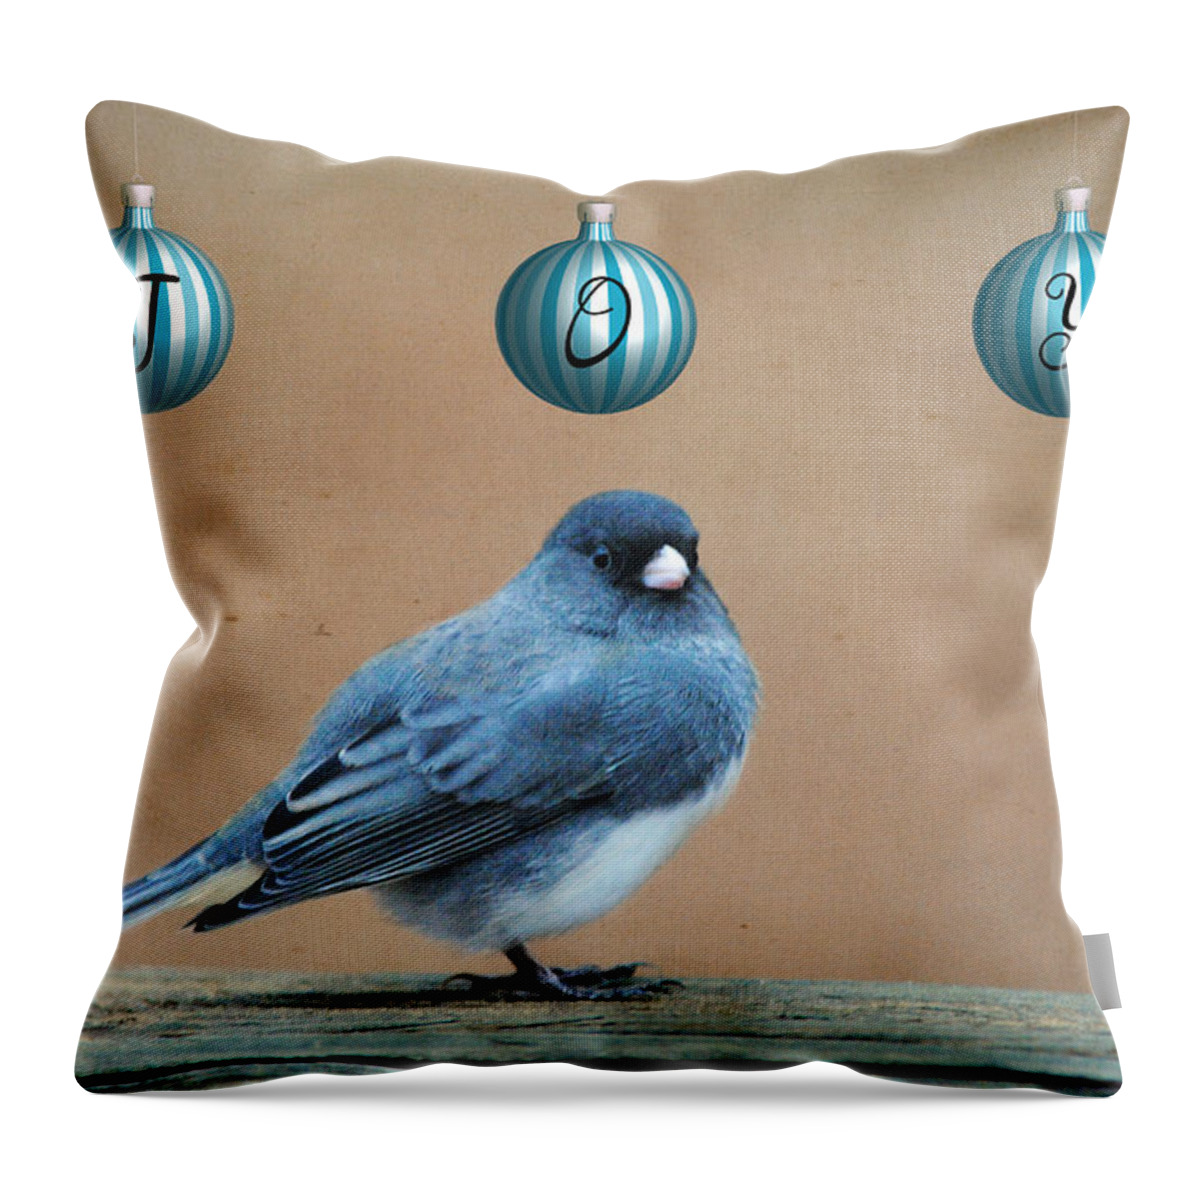 Blue Bird Throw Pillow featuring the digital art Christmas Joy by Linda Segerson